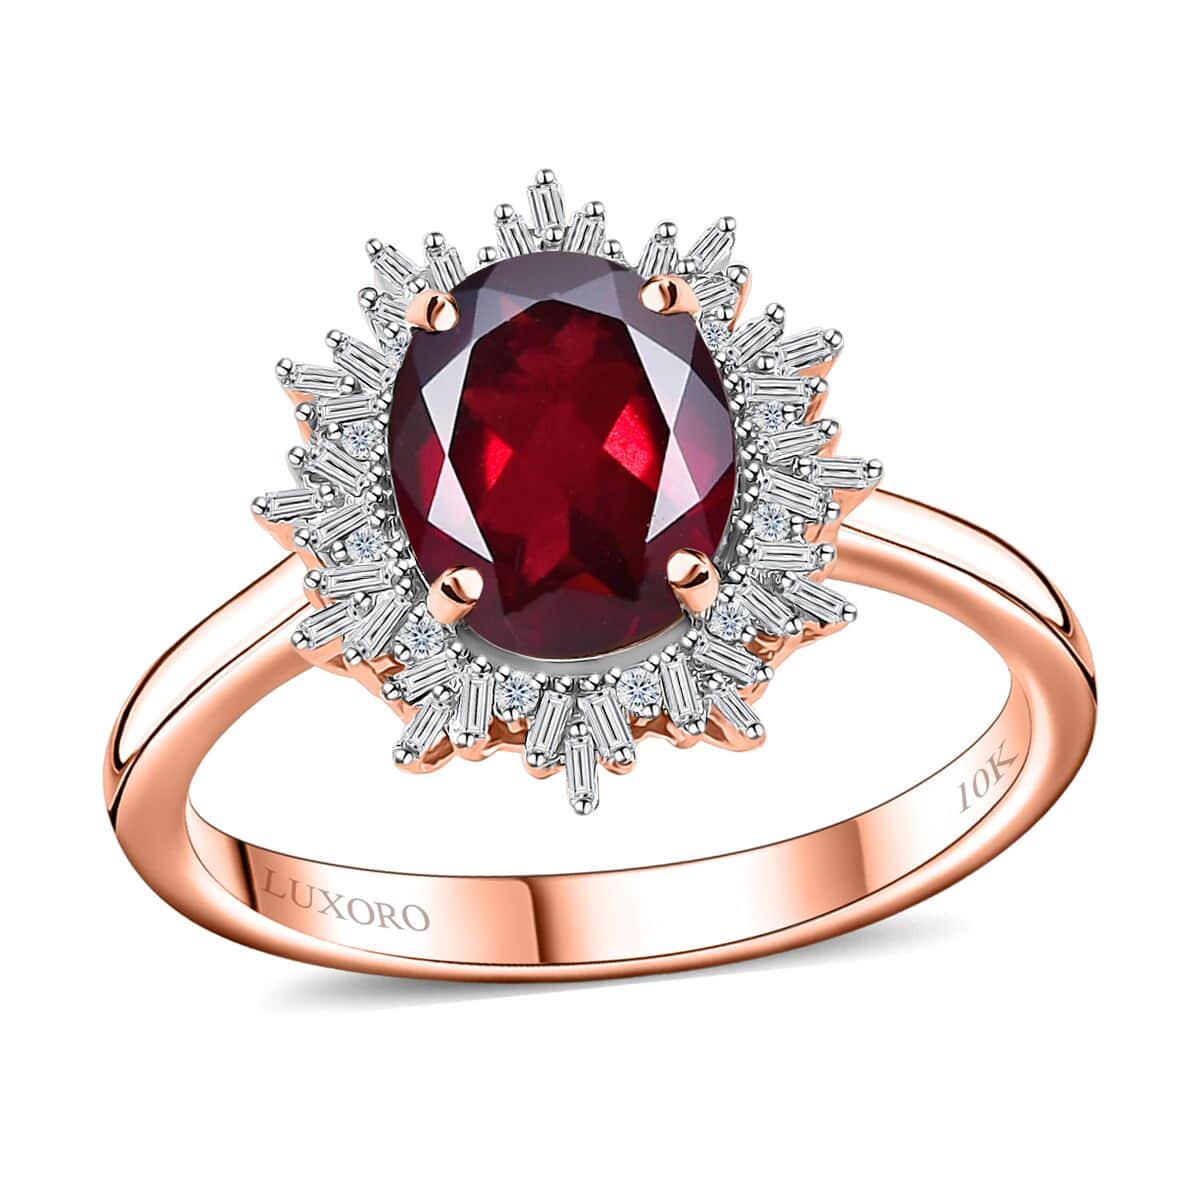 Luxoro 10K Rose Gold Premium Orissa Rhodolite Garnet and G-H I2 Diamond Ring (Size 10.0) 3.25 ctw image number 0